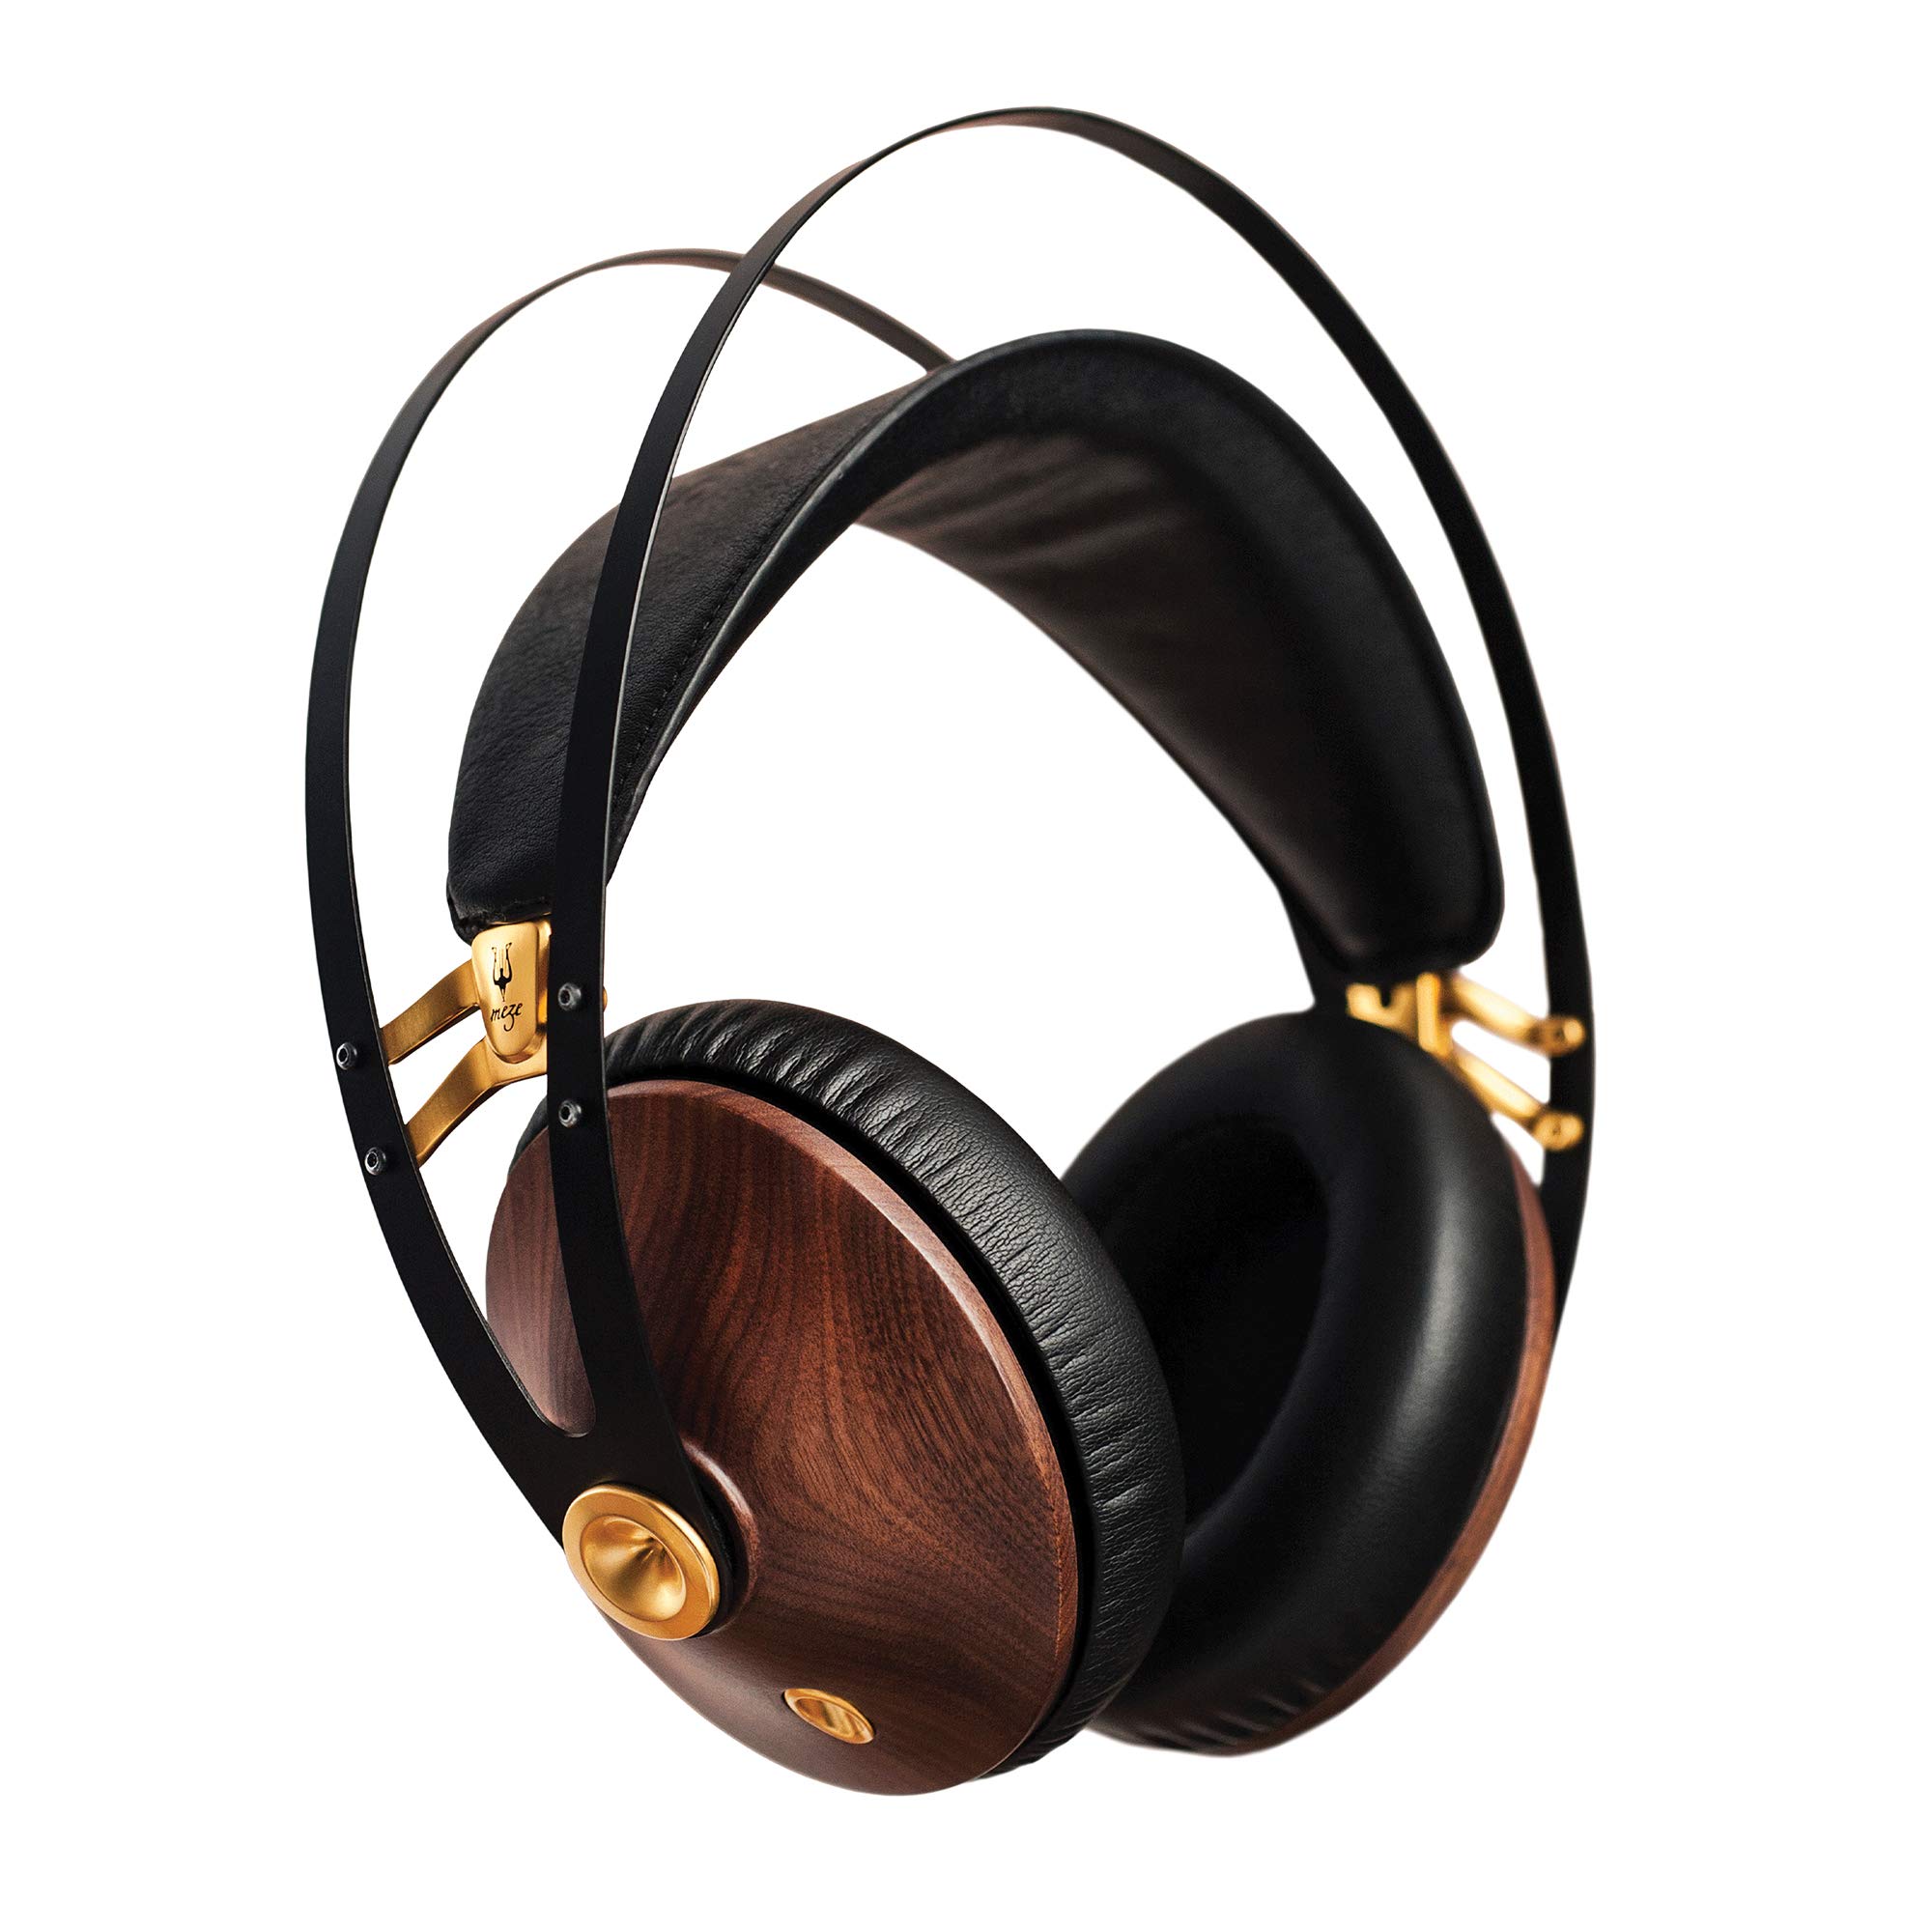  Meze Headphones Meze 99 クラシック ウォルナット ゴールド |マイクと自動調整可能なヘッドバンド付きの有線オーバーイヤーヘッドフォン |オーディオフ...